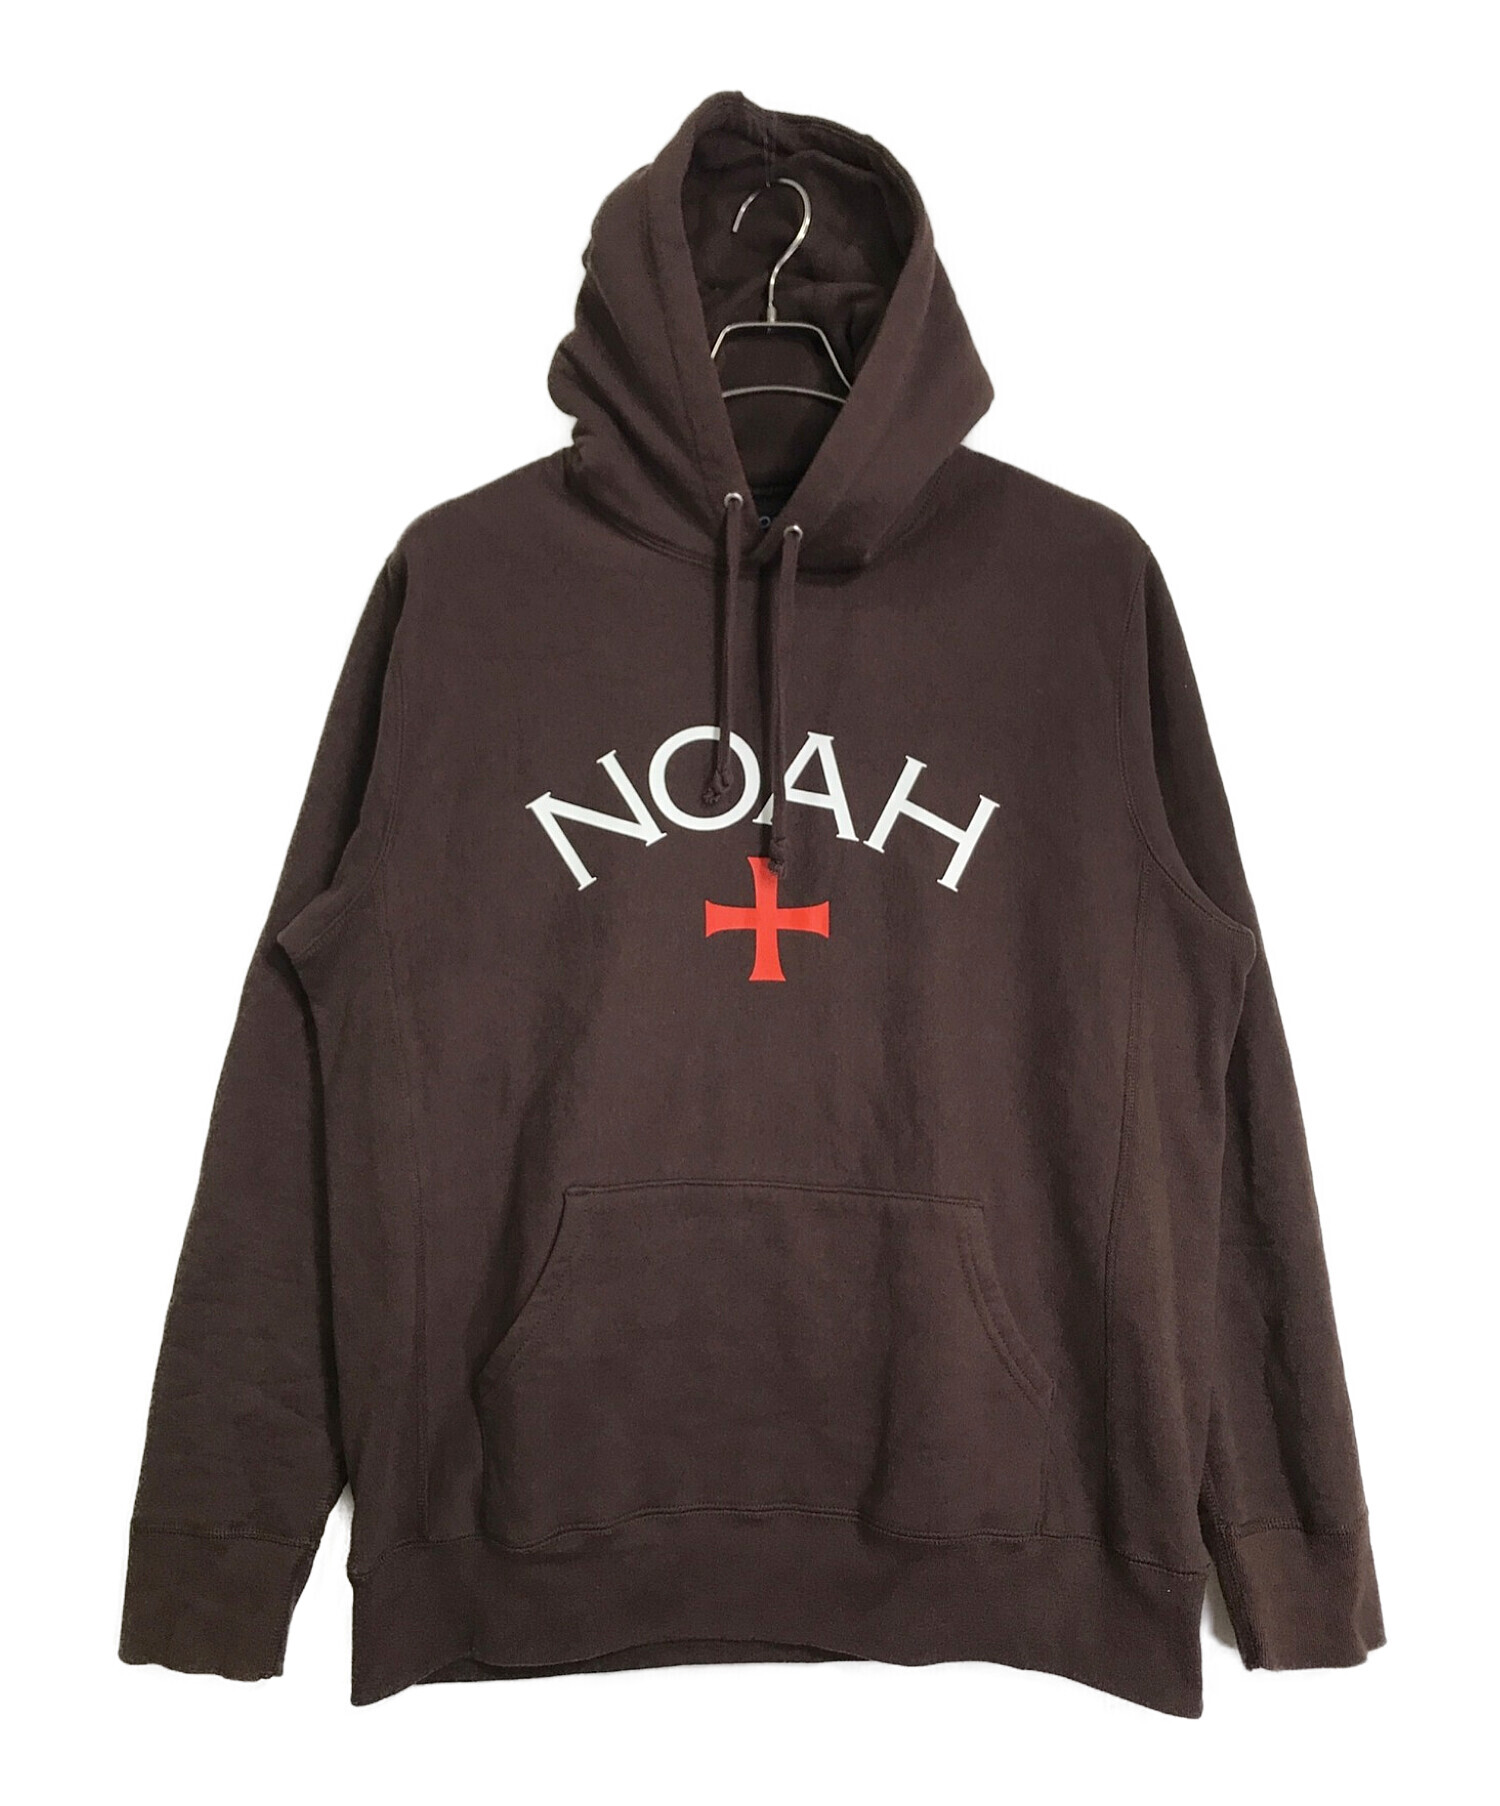 Noah (ノア) ロゴパーカー ブラウン サイズ:L